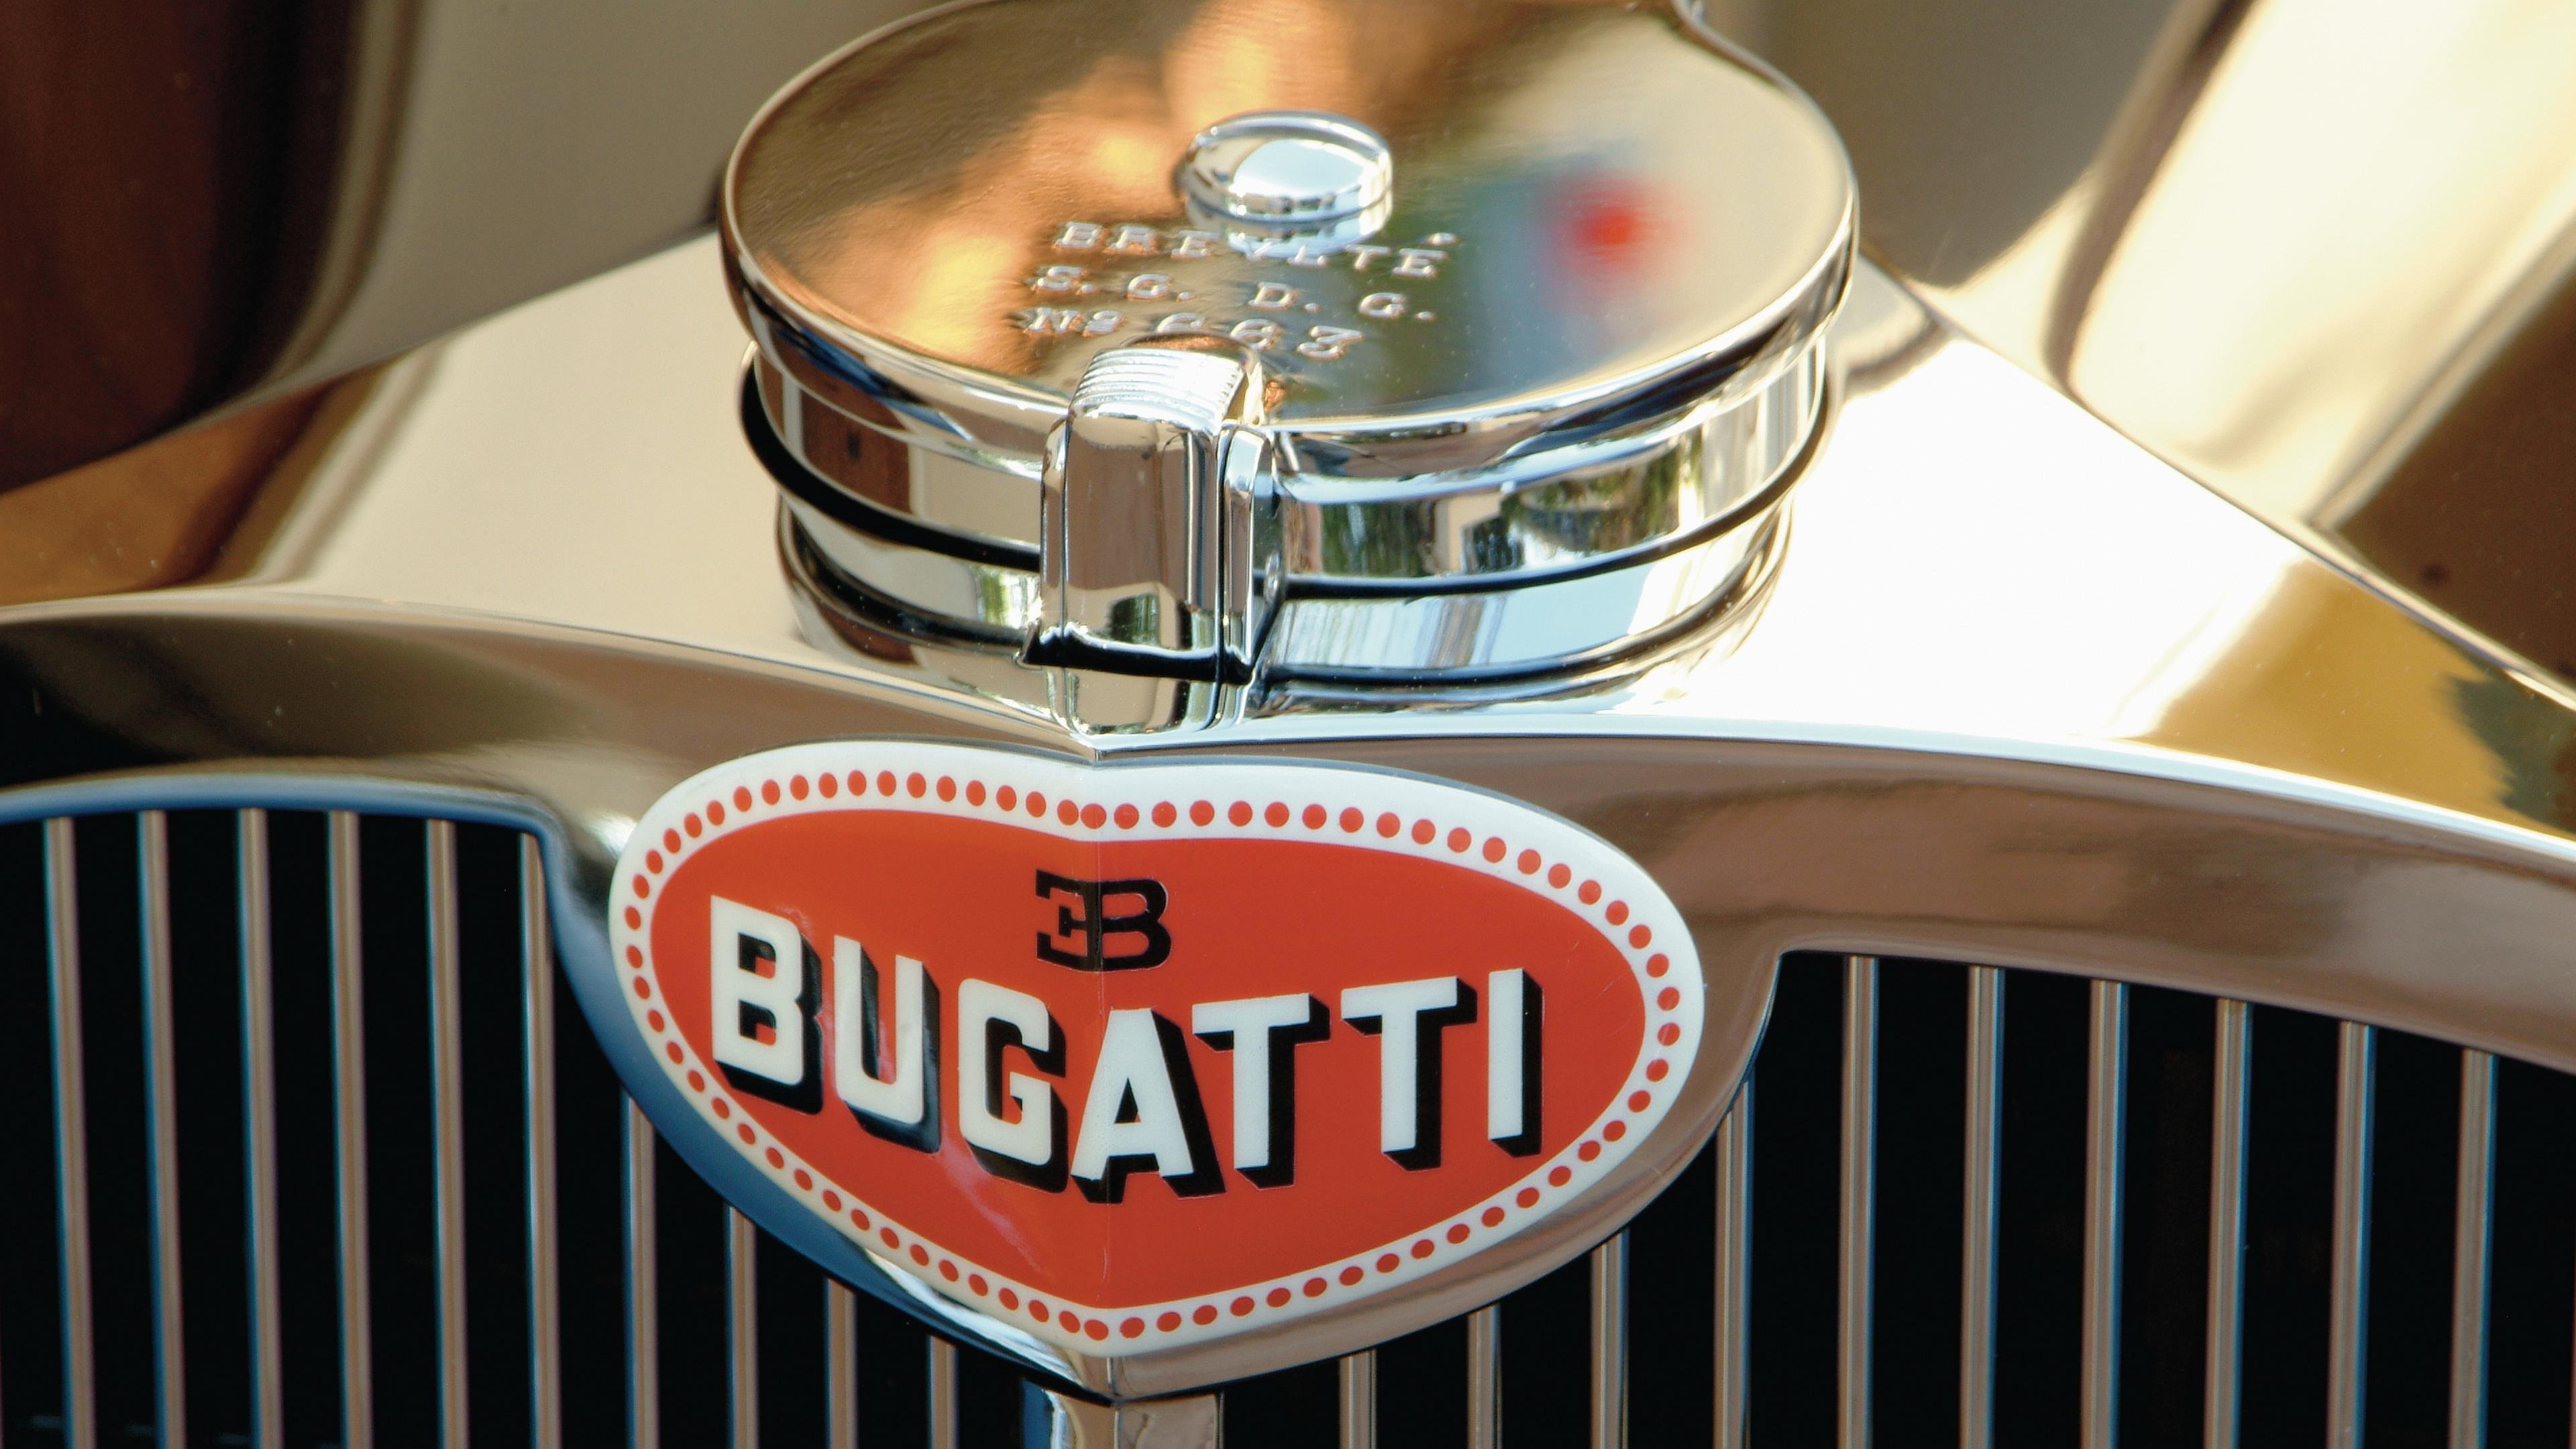 Free Bugatti high quality wallpaper ID:280933 for 4k computer